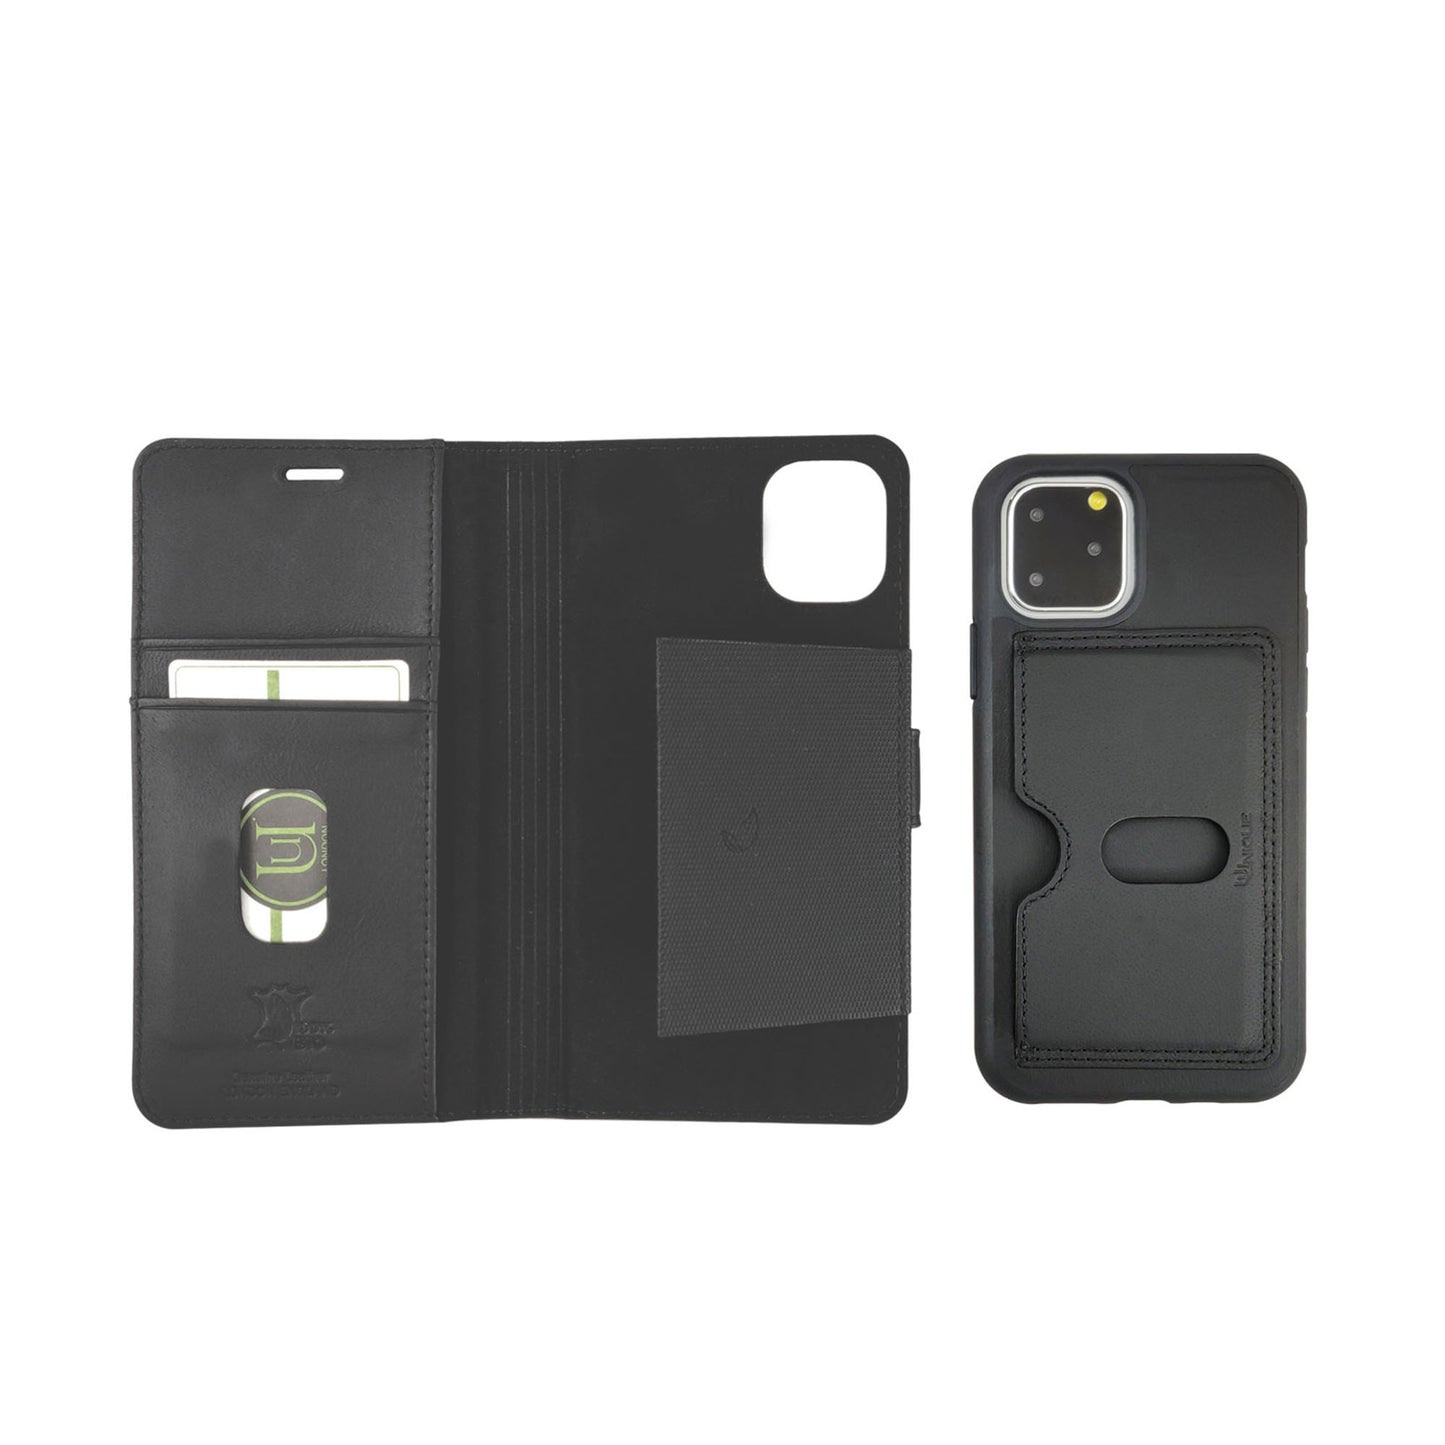 iPhone 11 Pro Uunique Black Olive Nutrisiti 2-in-1 Eco Leather Folio & Detachable Back Case - 15-05081